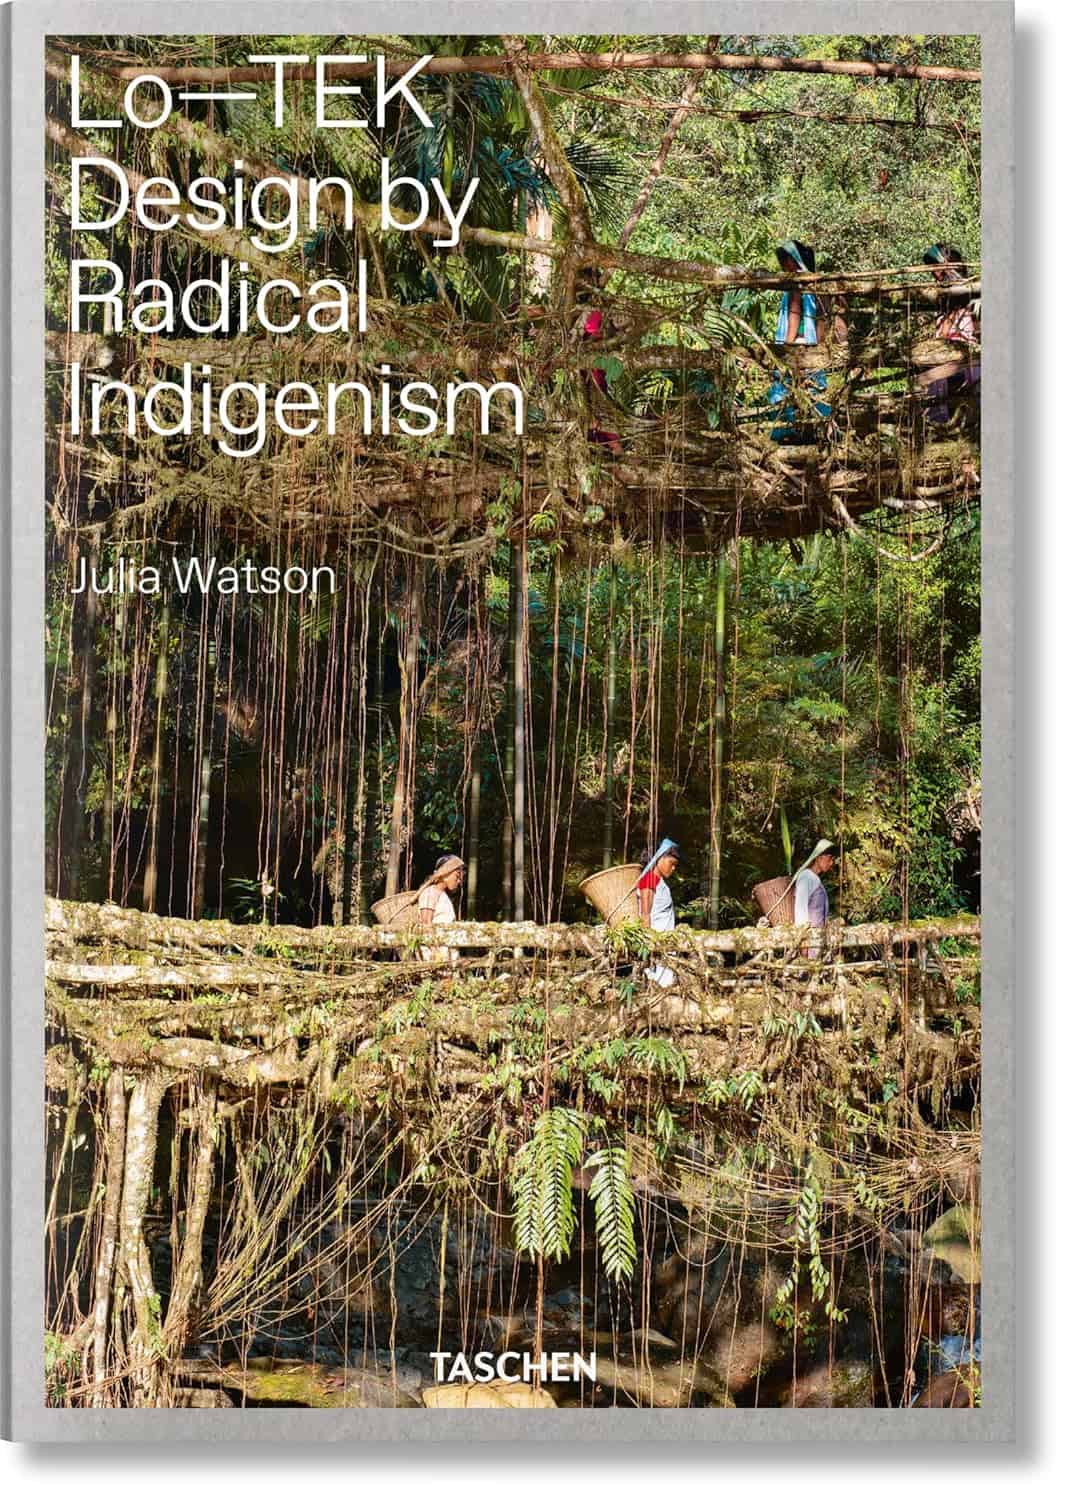 Lo—TEK Design by Radical Indigenism